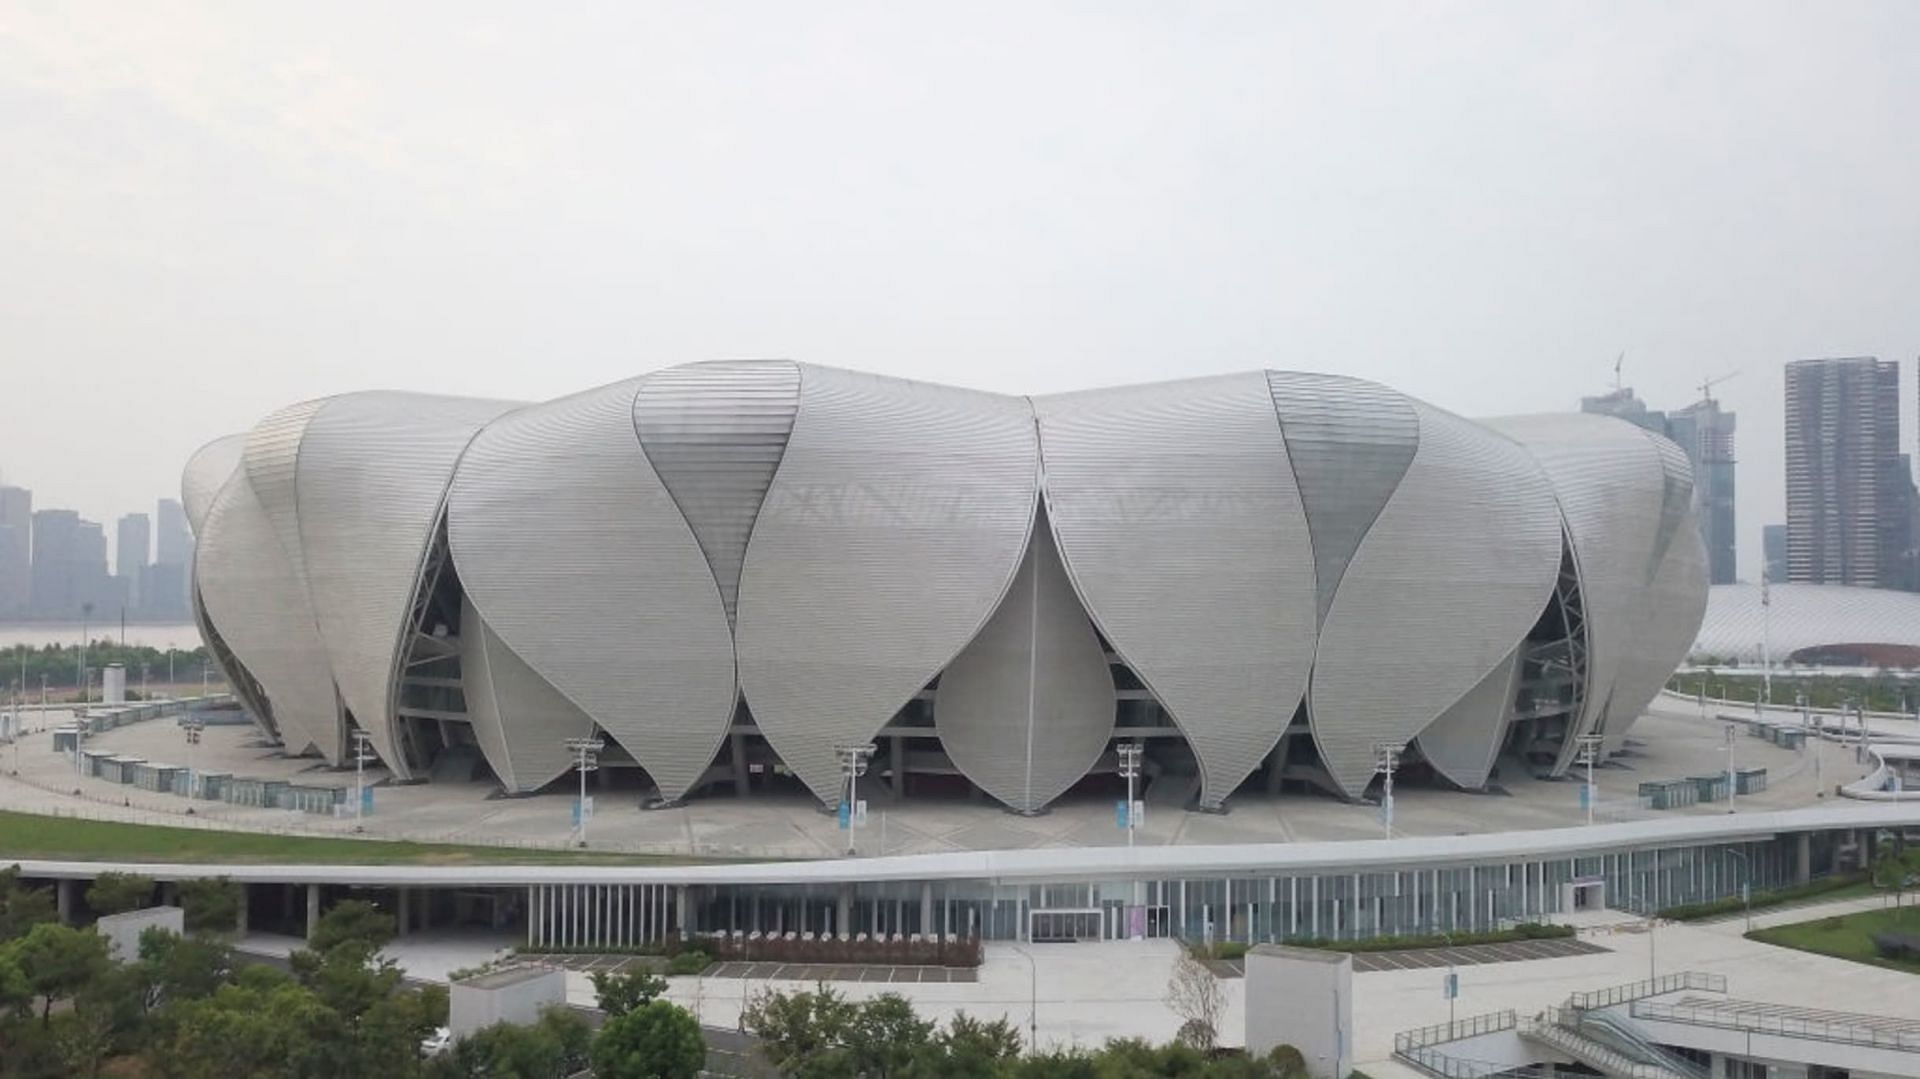 The Hangzhou Olympic Sports Center Stadium